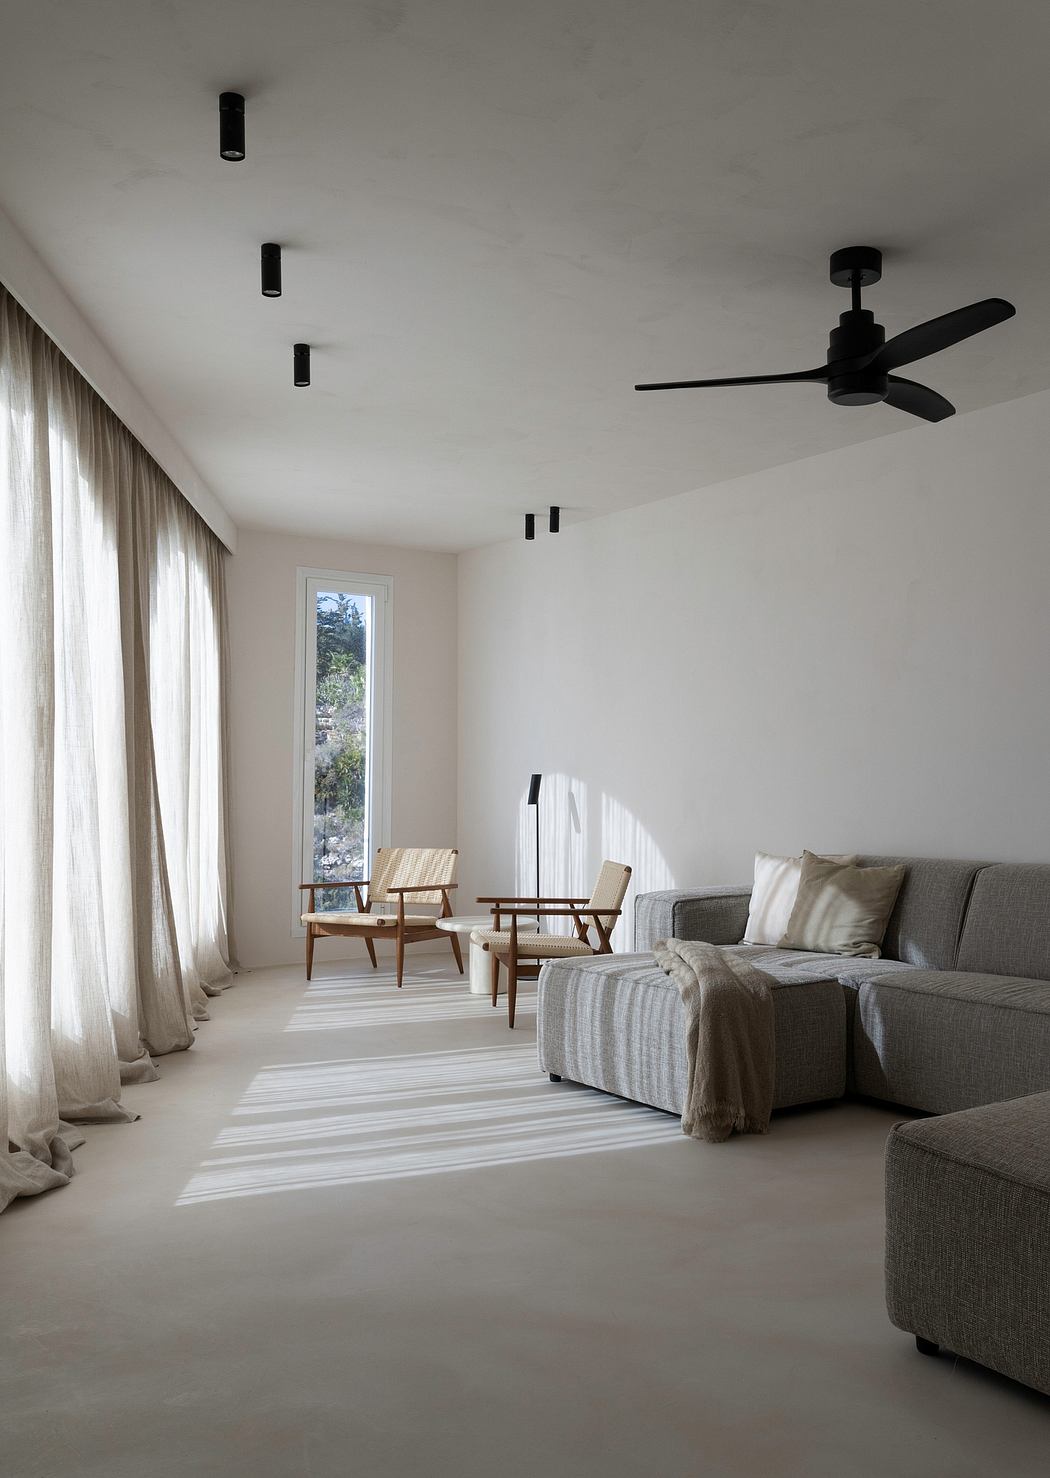 A minimalist living room with sleek, modern furniture and mood lighting.